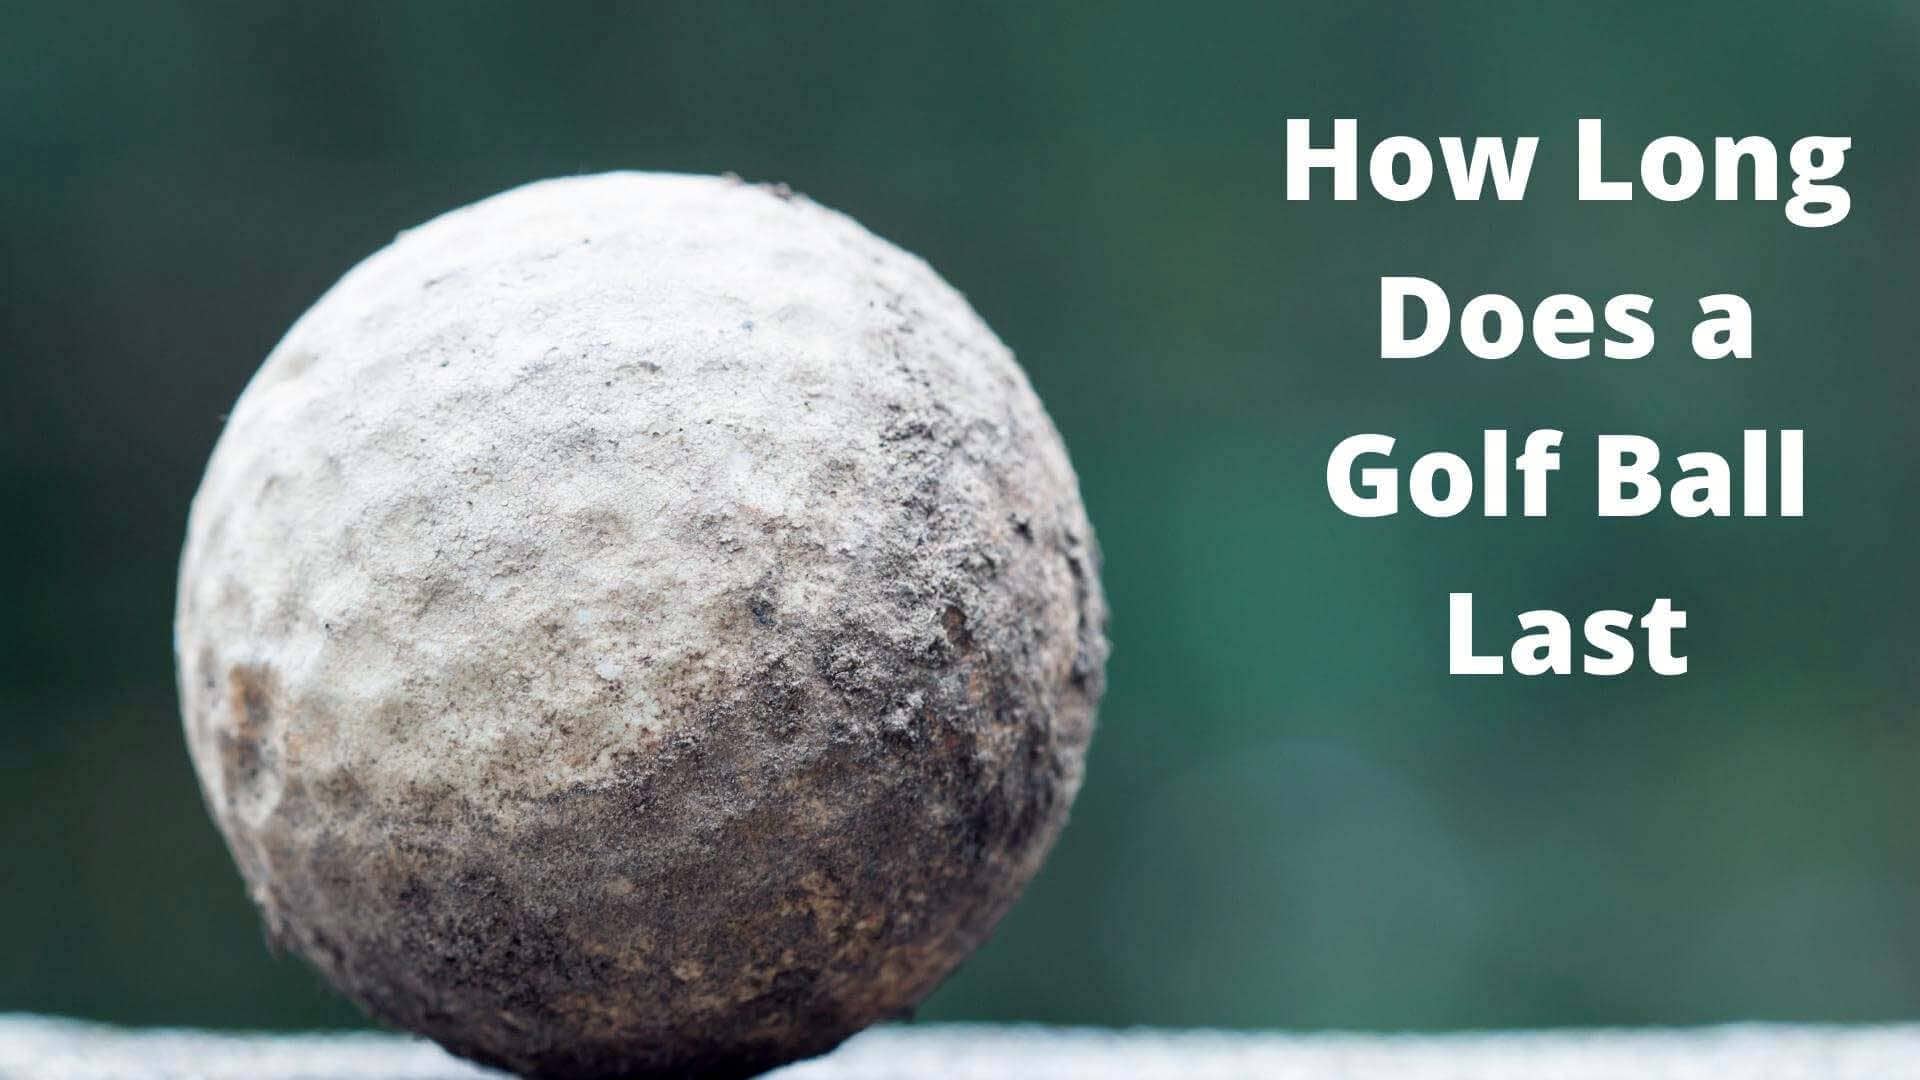 How long does a golf ball last